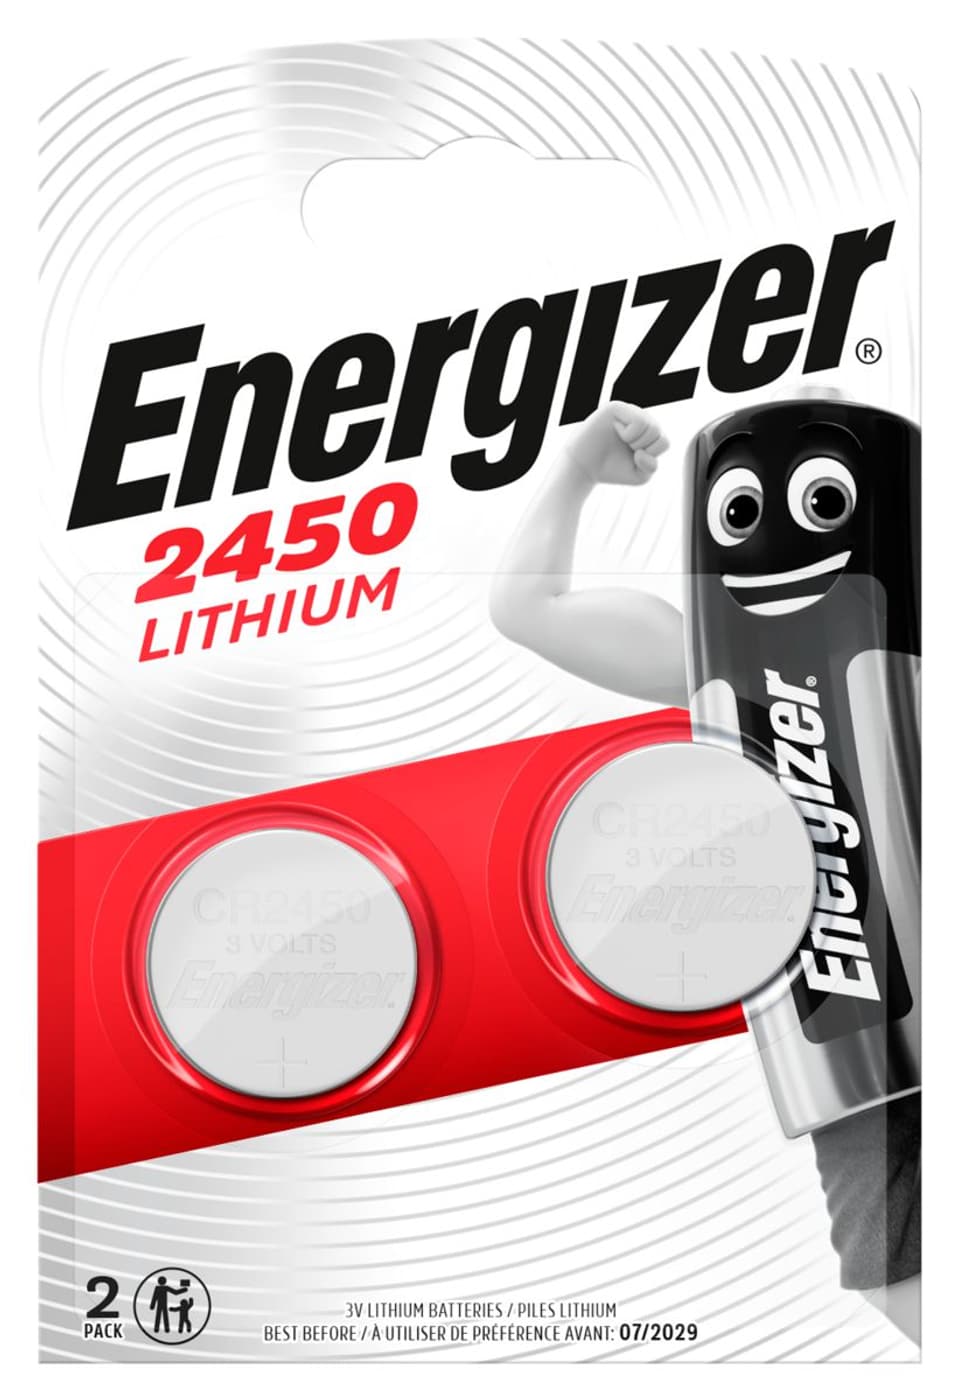 energizer 2450